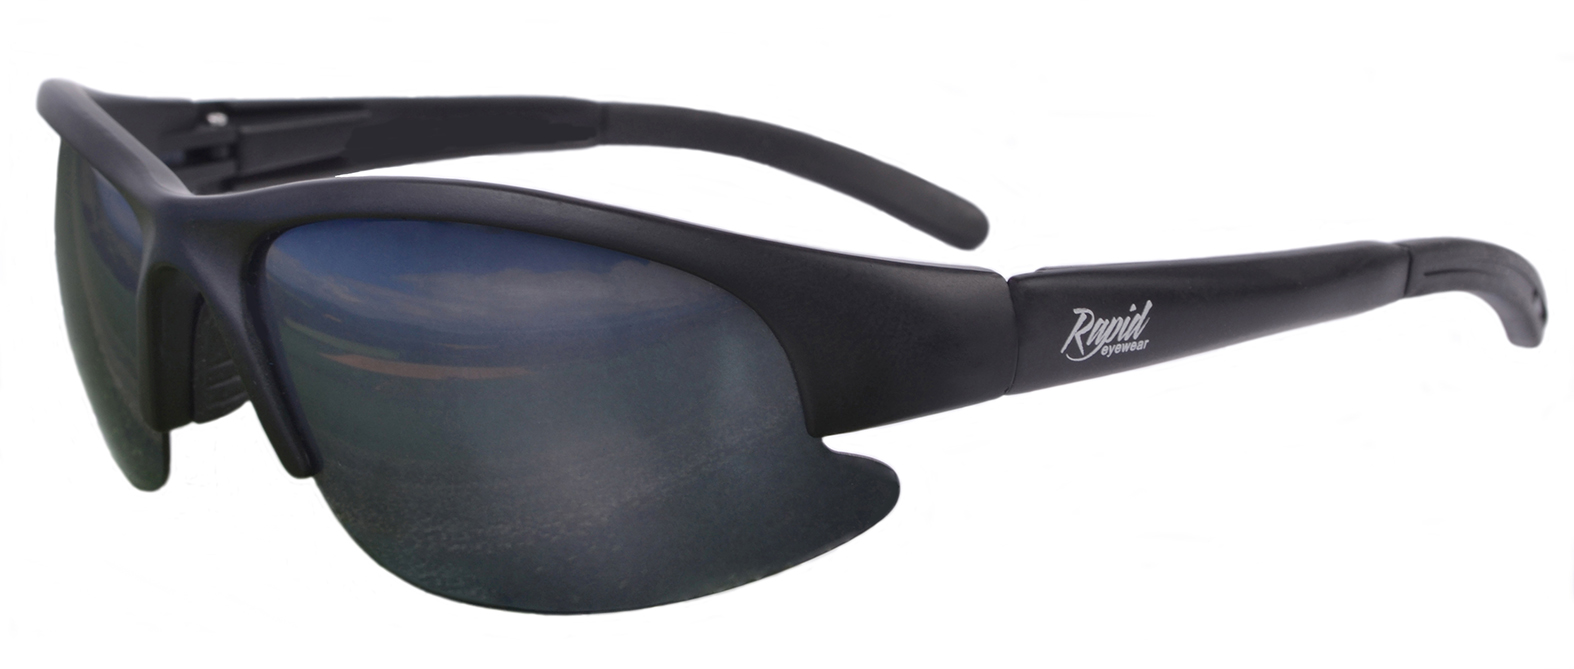 Rapid Eyewear Nimbus sports sunglasses with changeable lenses